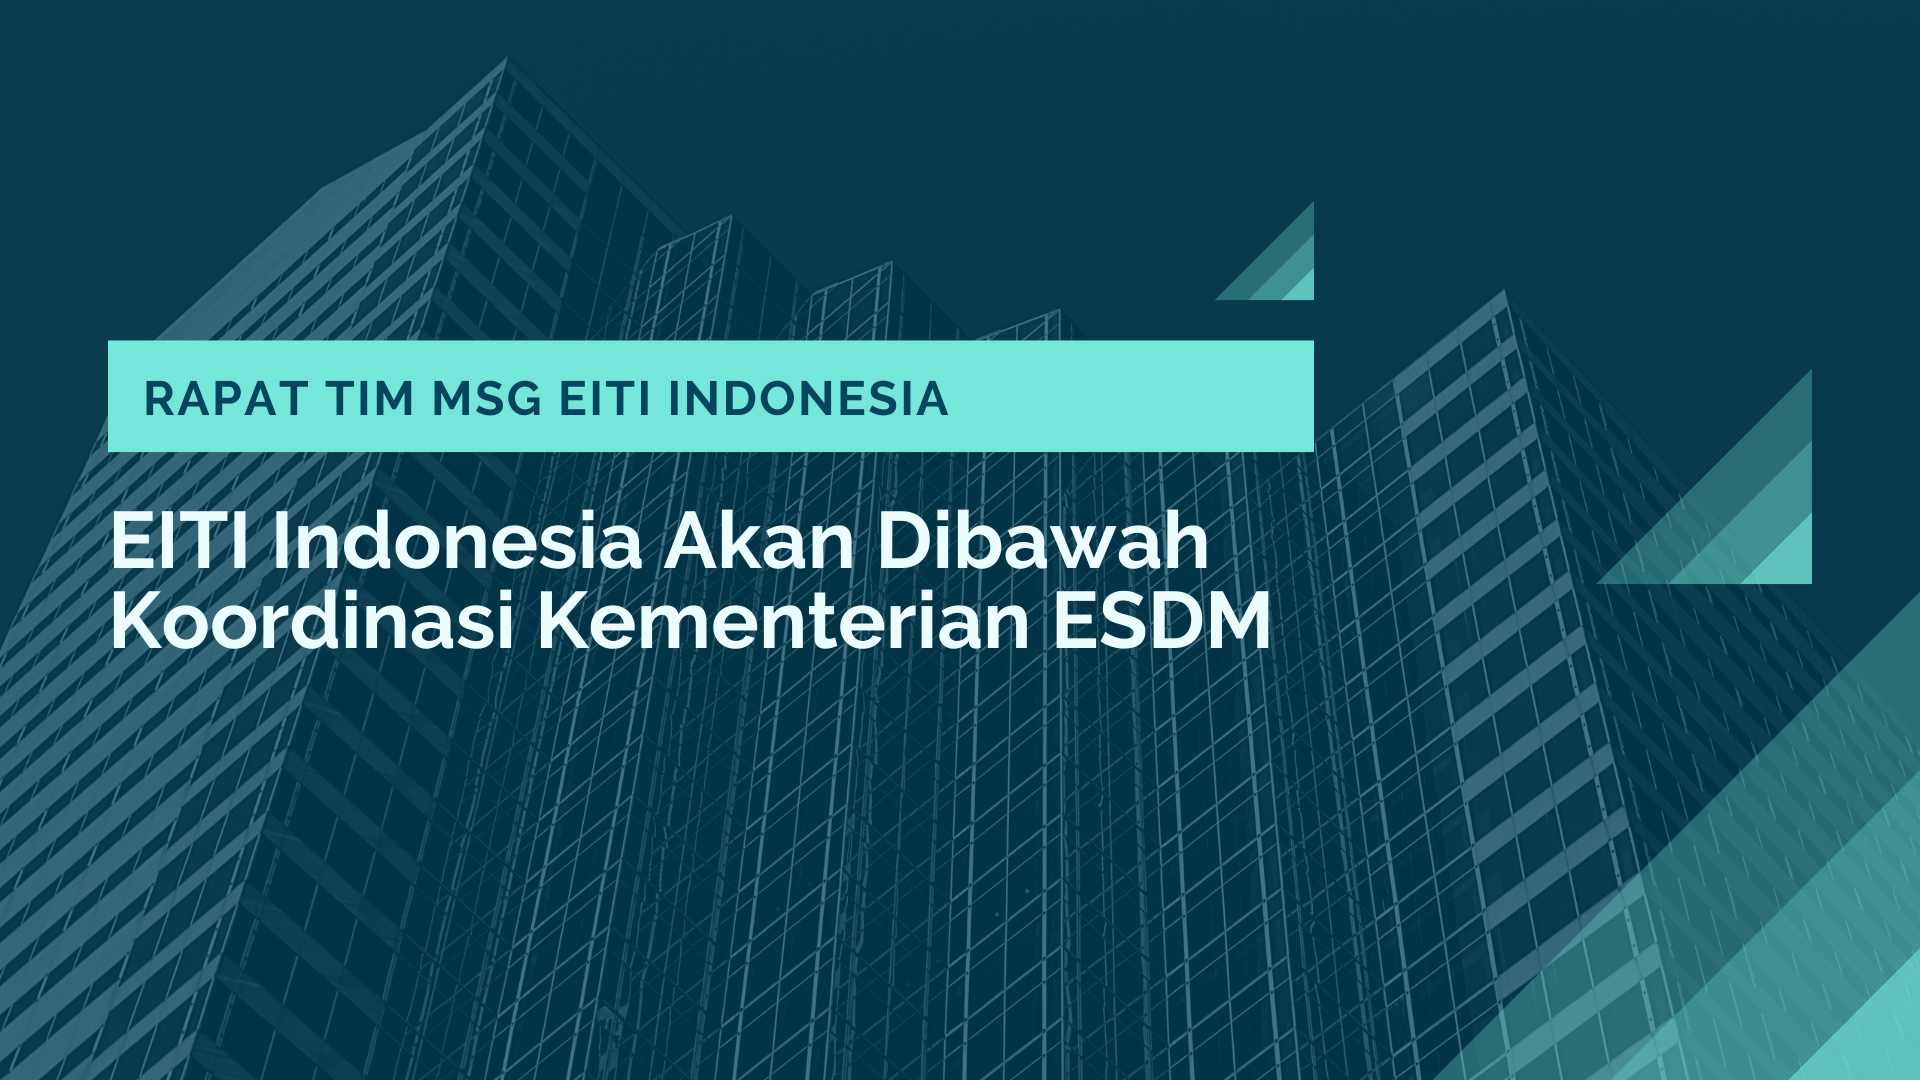 EITI Indonesia Akan Dibawah Koordinasi Kementerian ESDM